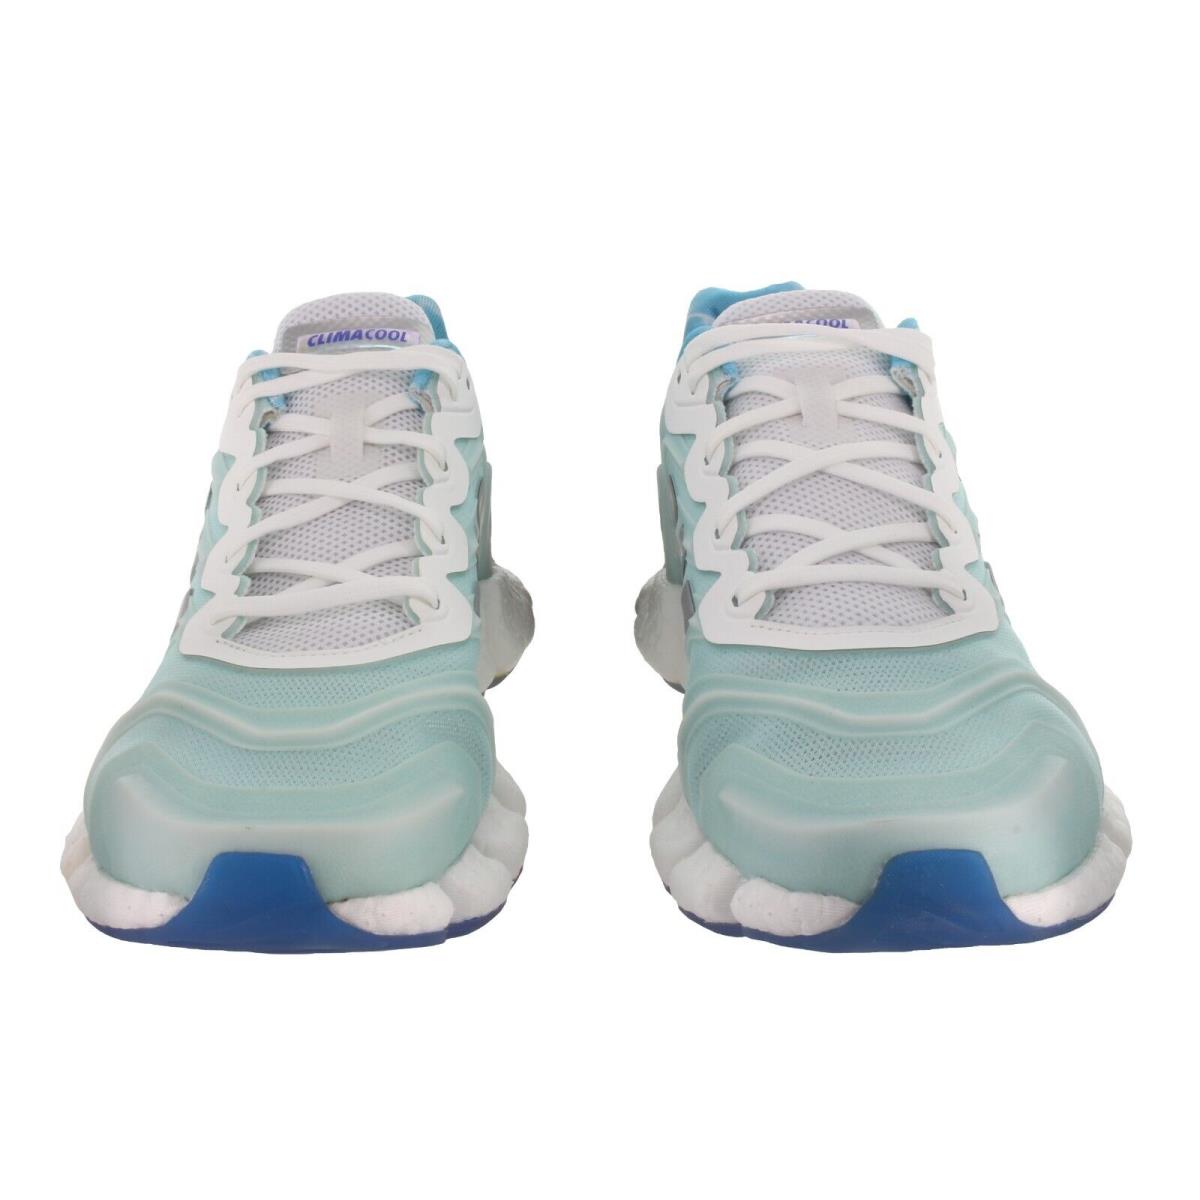 Adidas shoes Climacool Vento - Cloud White, Pulse Aqua, Silver Metallic 1